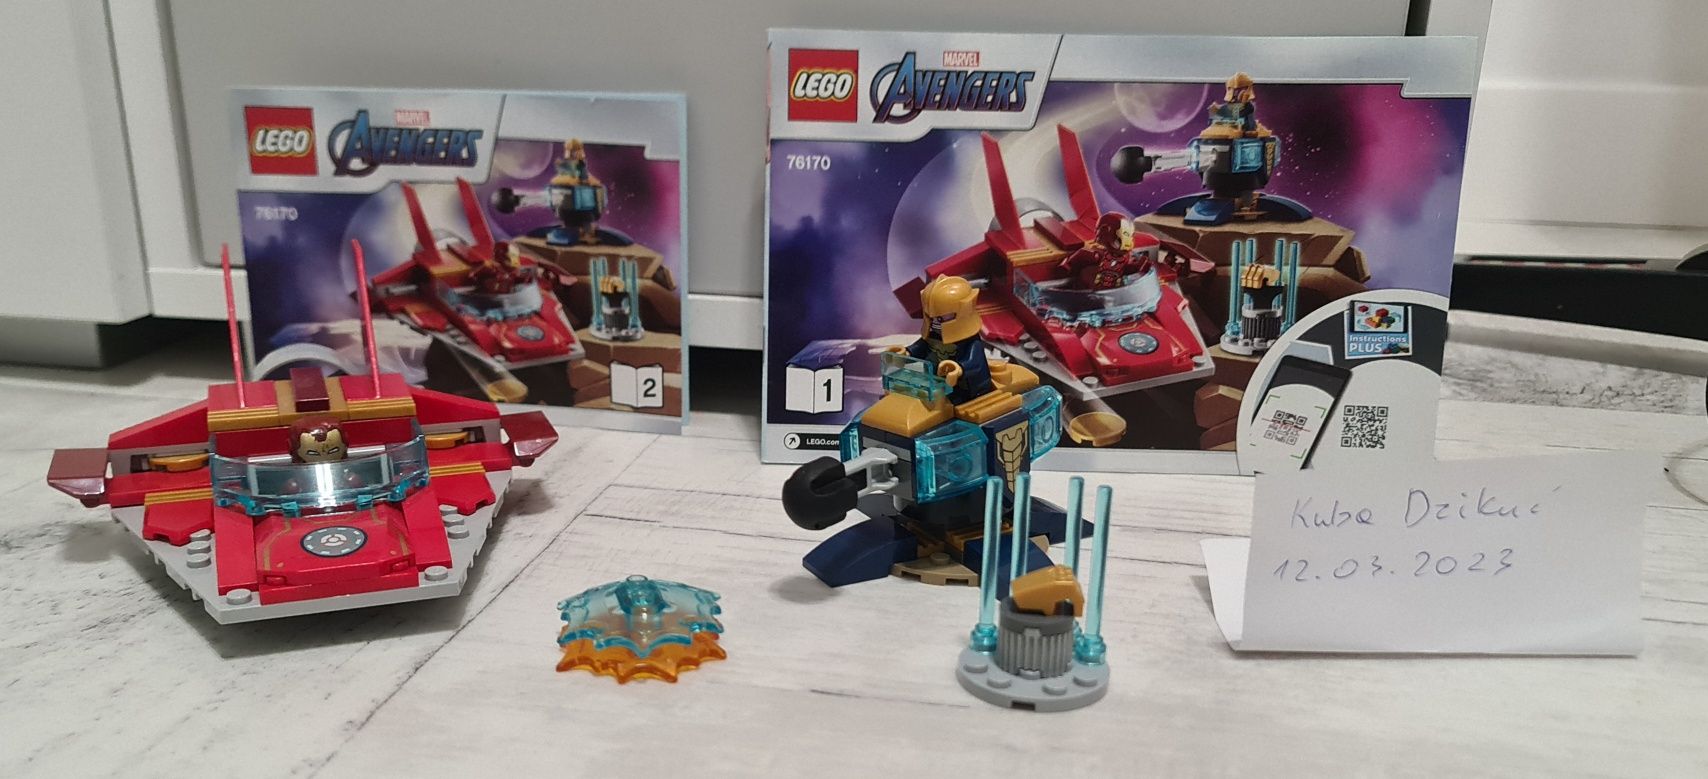 LEGO MARVEL Super Heroes AVENGERS 76170 - Iron Man vs. Thanos